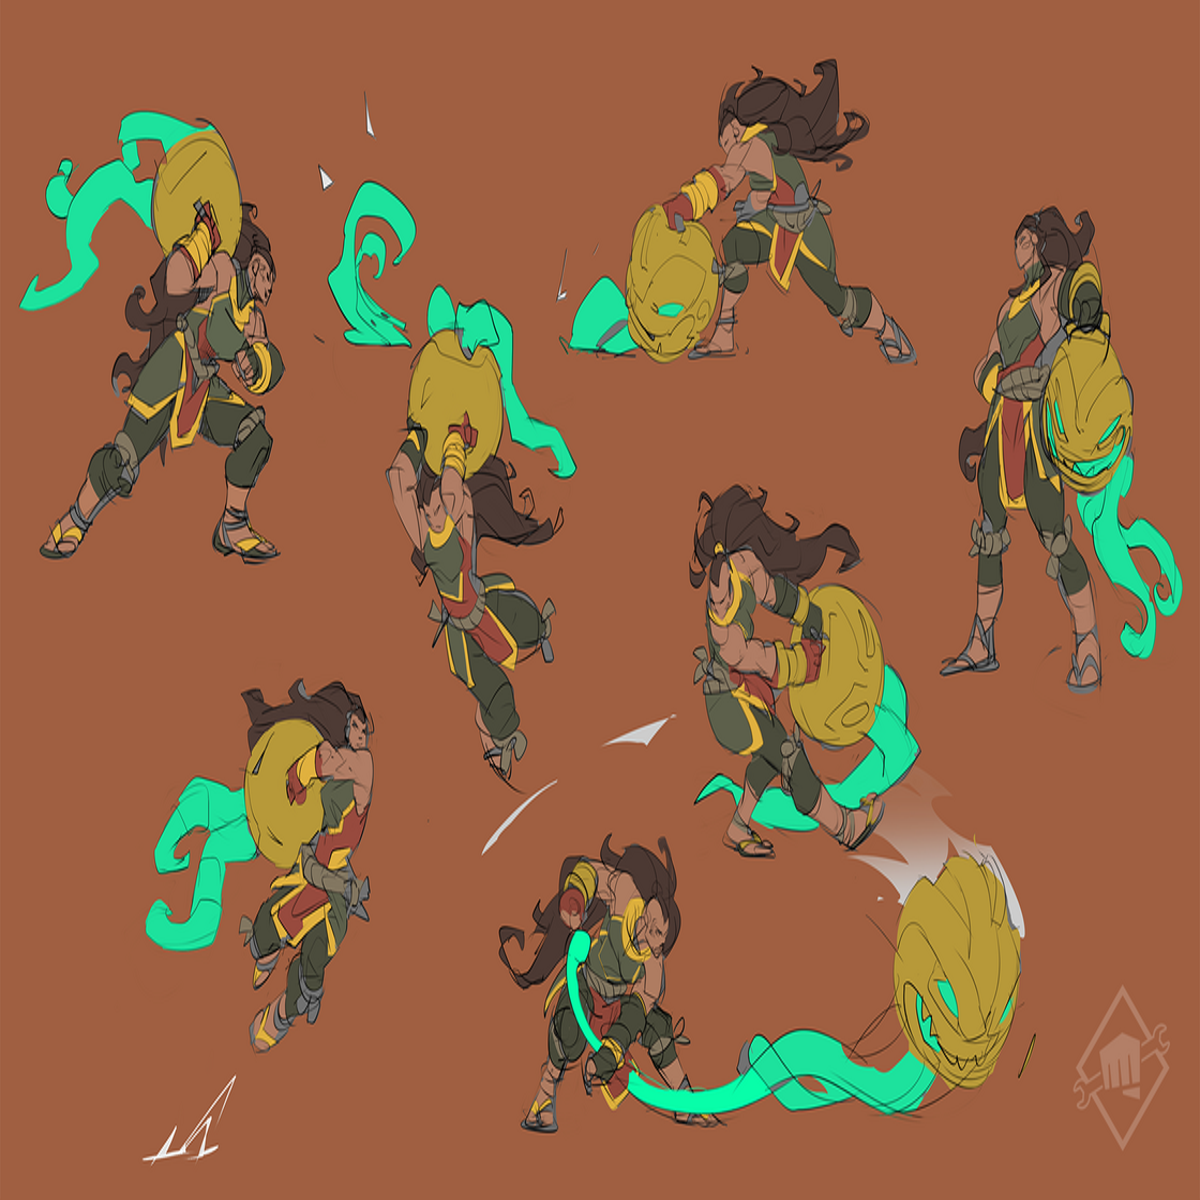 LoL Illaoi the Kraken Priestess guide: builds, skills, runes setup